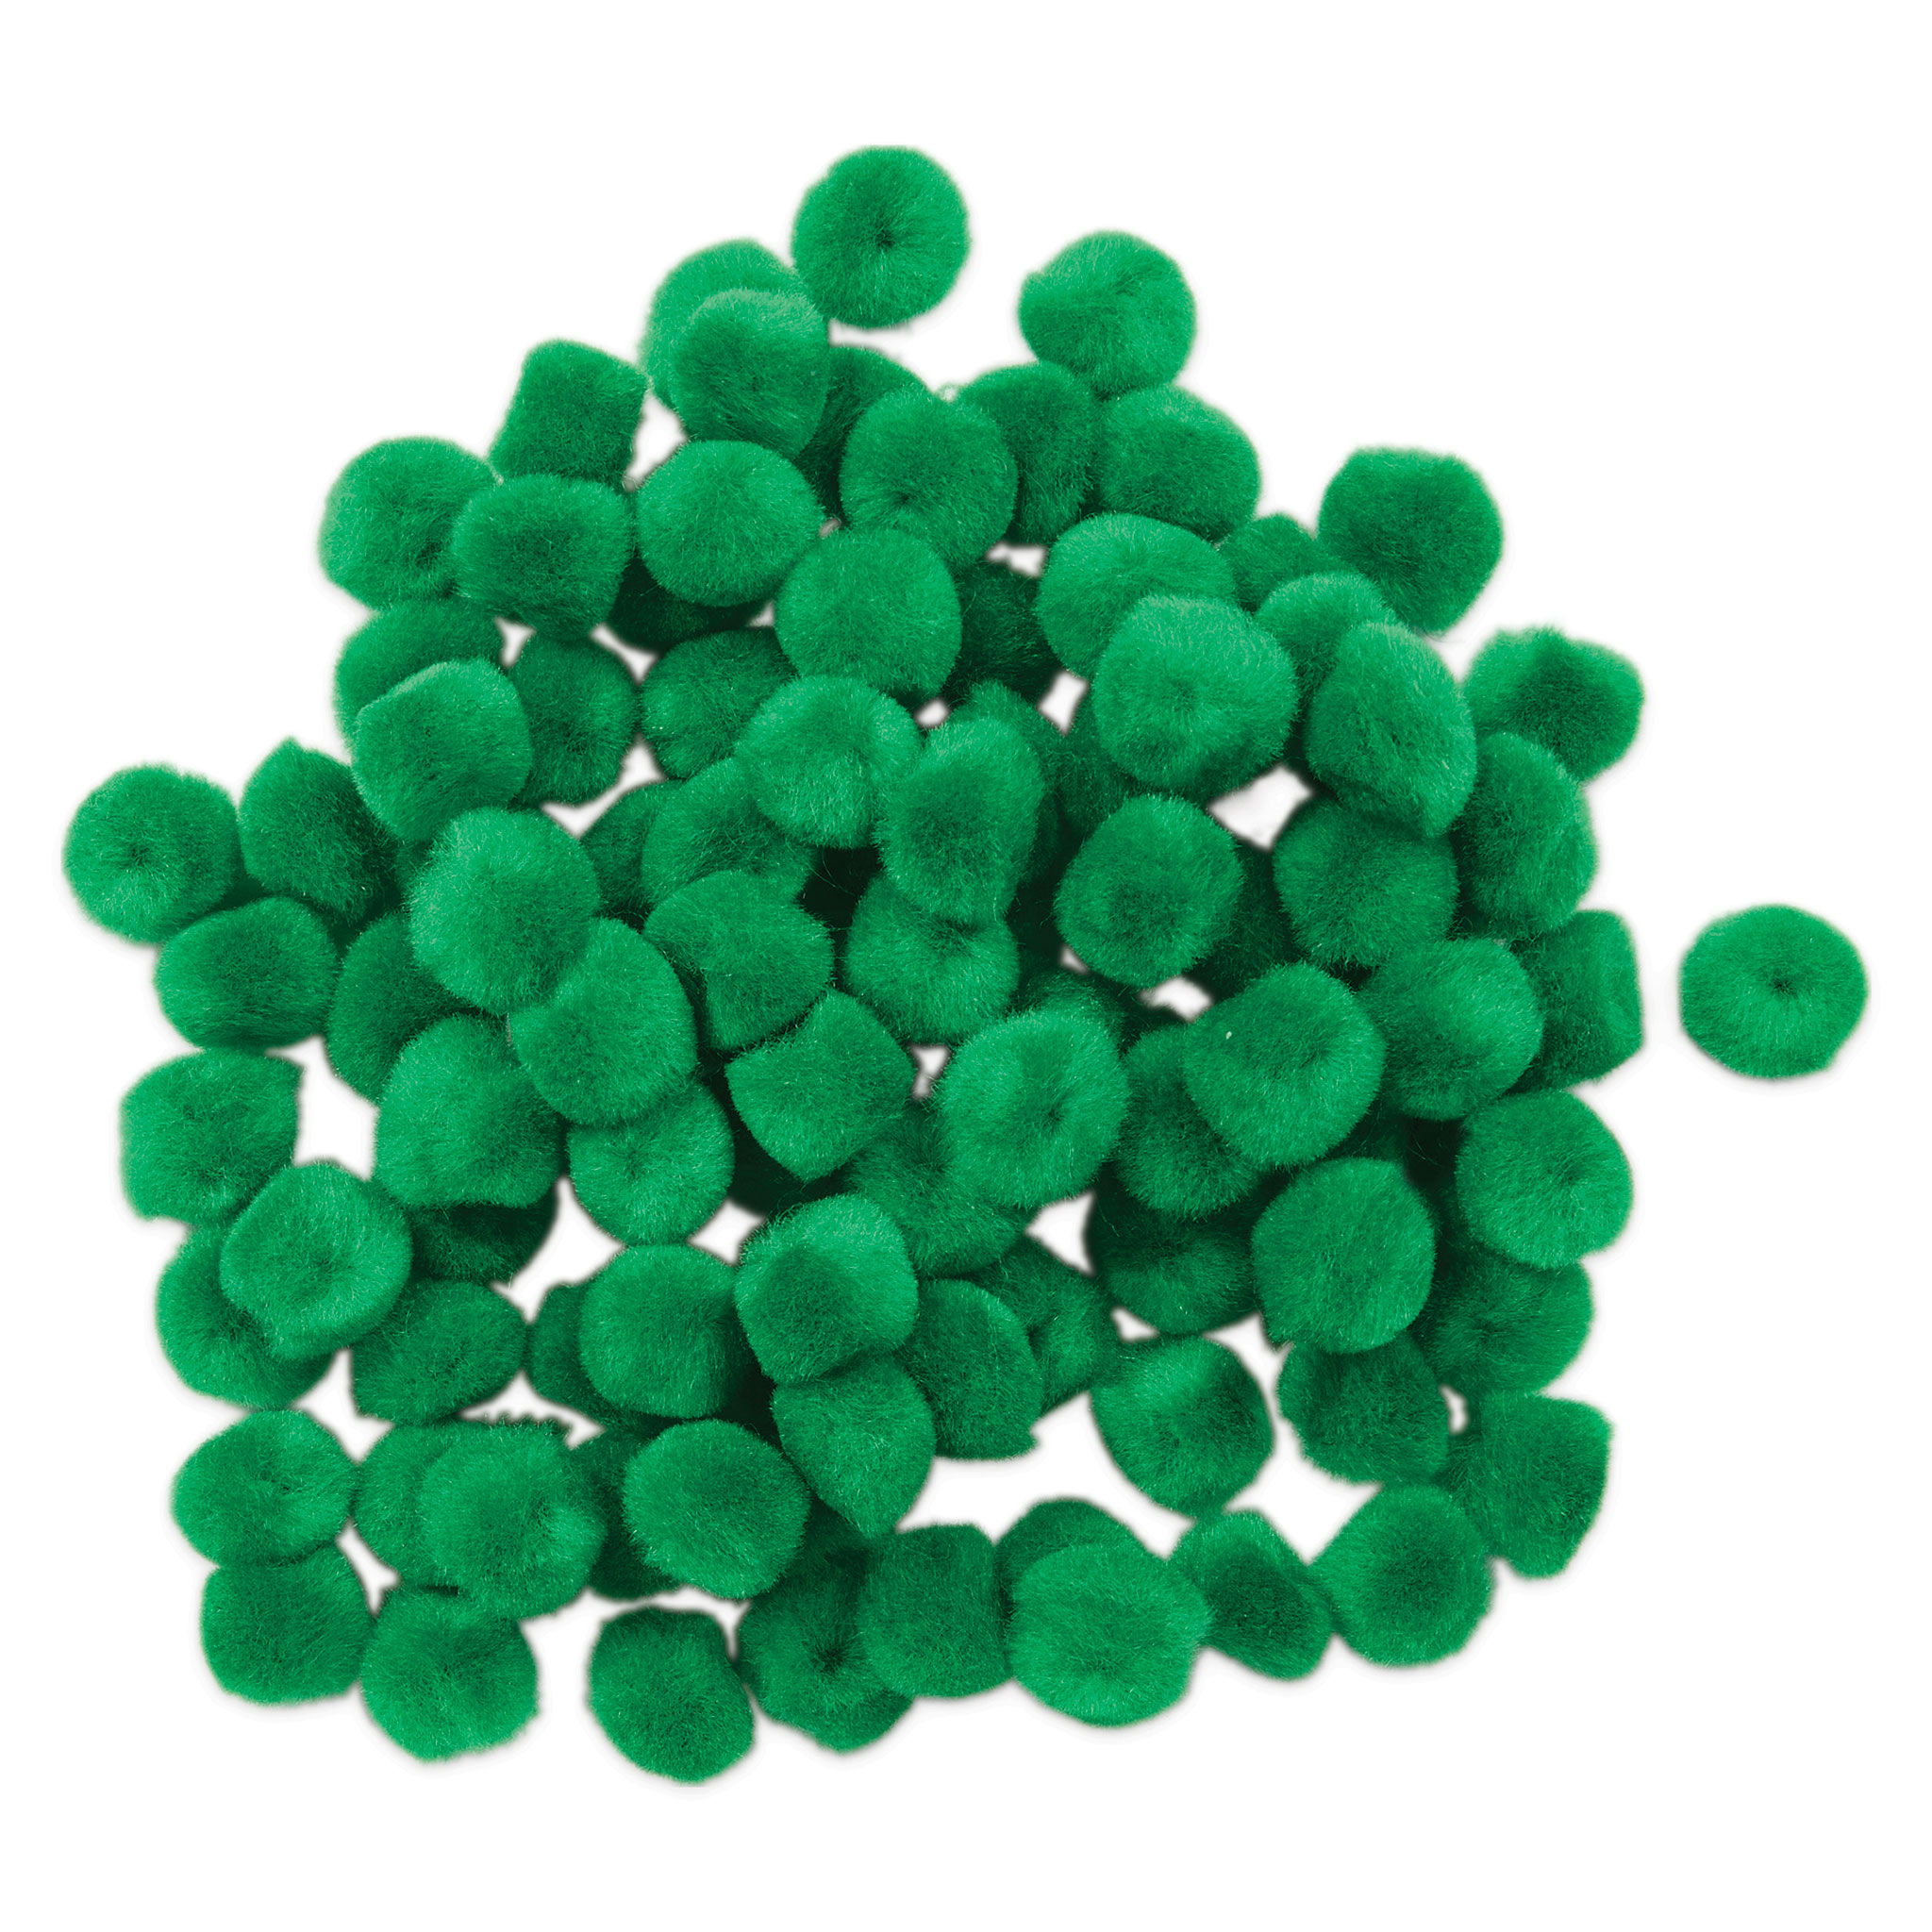 1/2 inch Kelly Green Mini Craft Pom Poms 100 Pieces